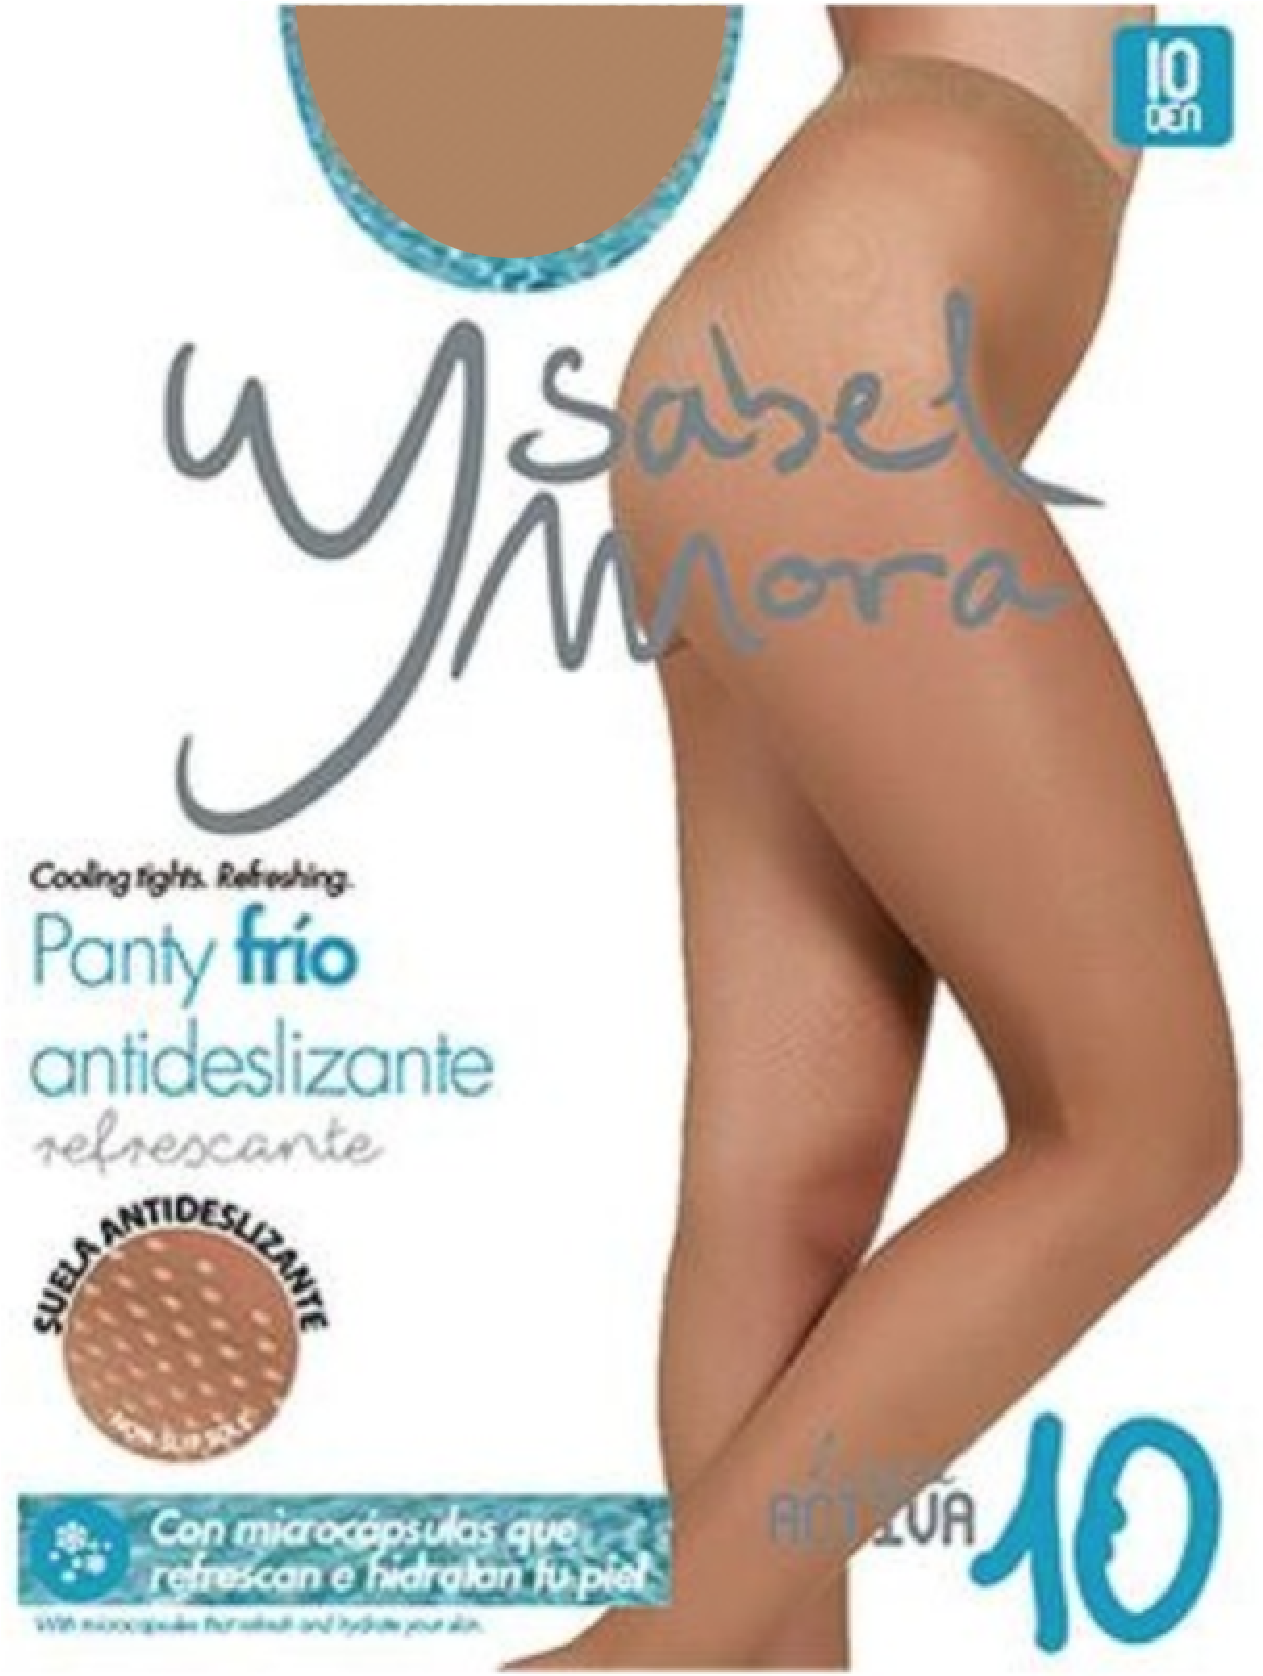 Ysabel Mora - Panty Frio Antideslizante – tights dept.